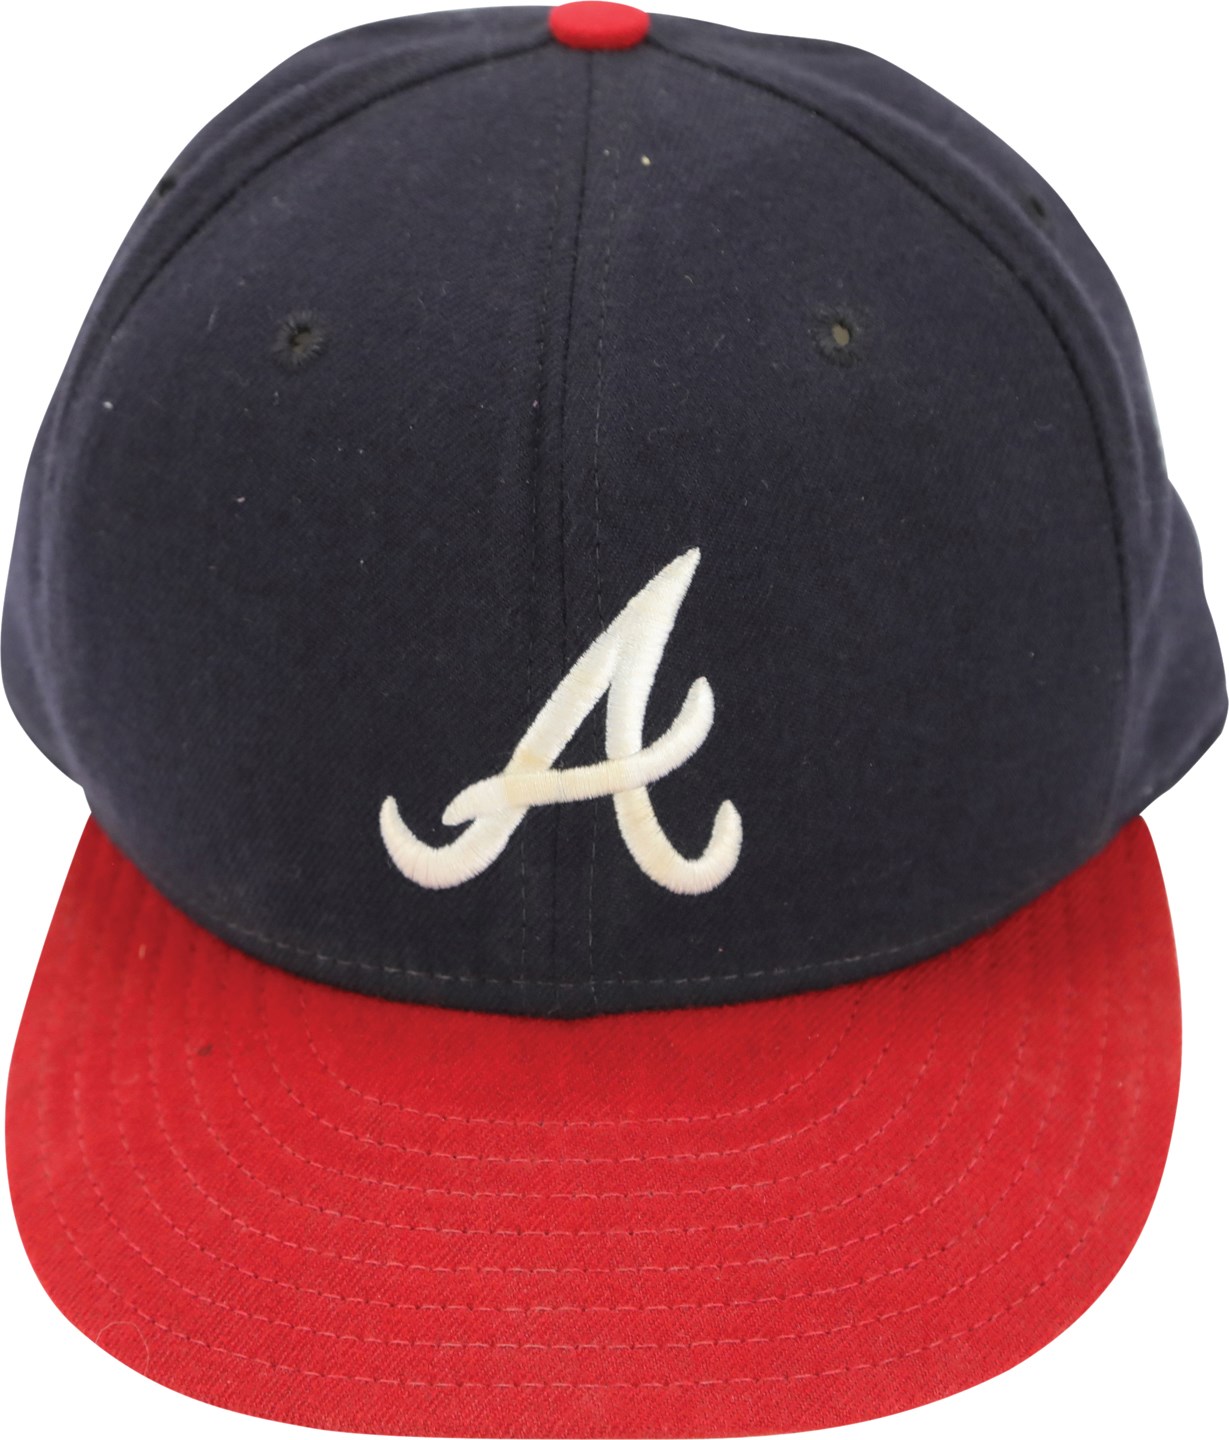 Baseball Equipment - 1993-96 Greg Maddux Autographed Atlanta Braves Game Used Hat